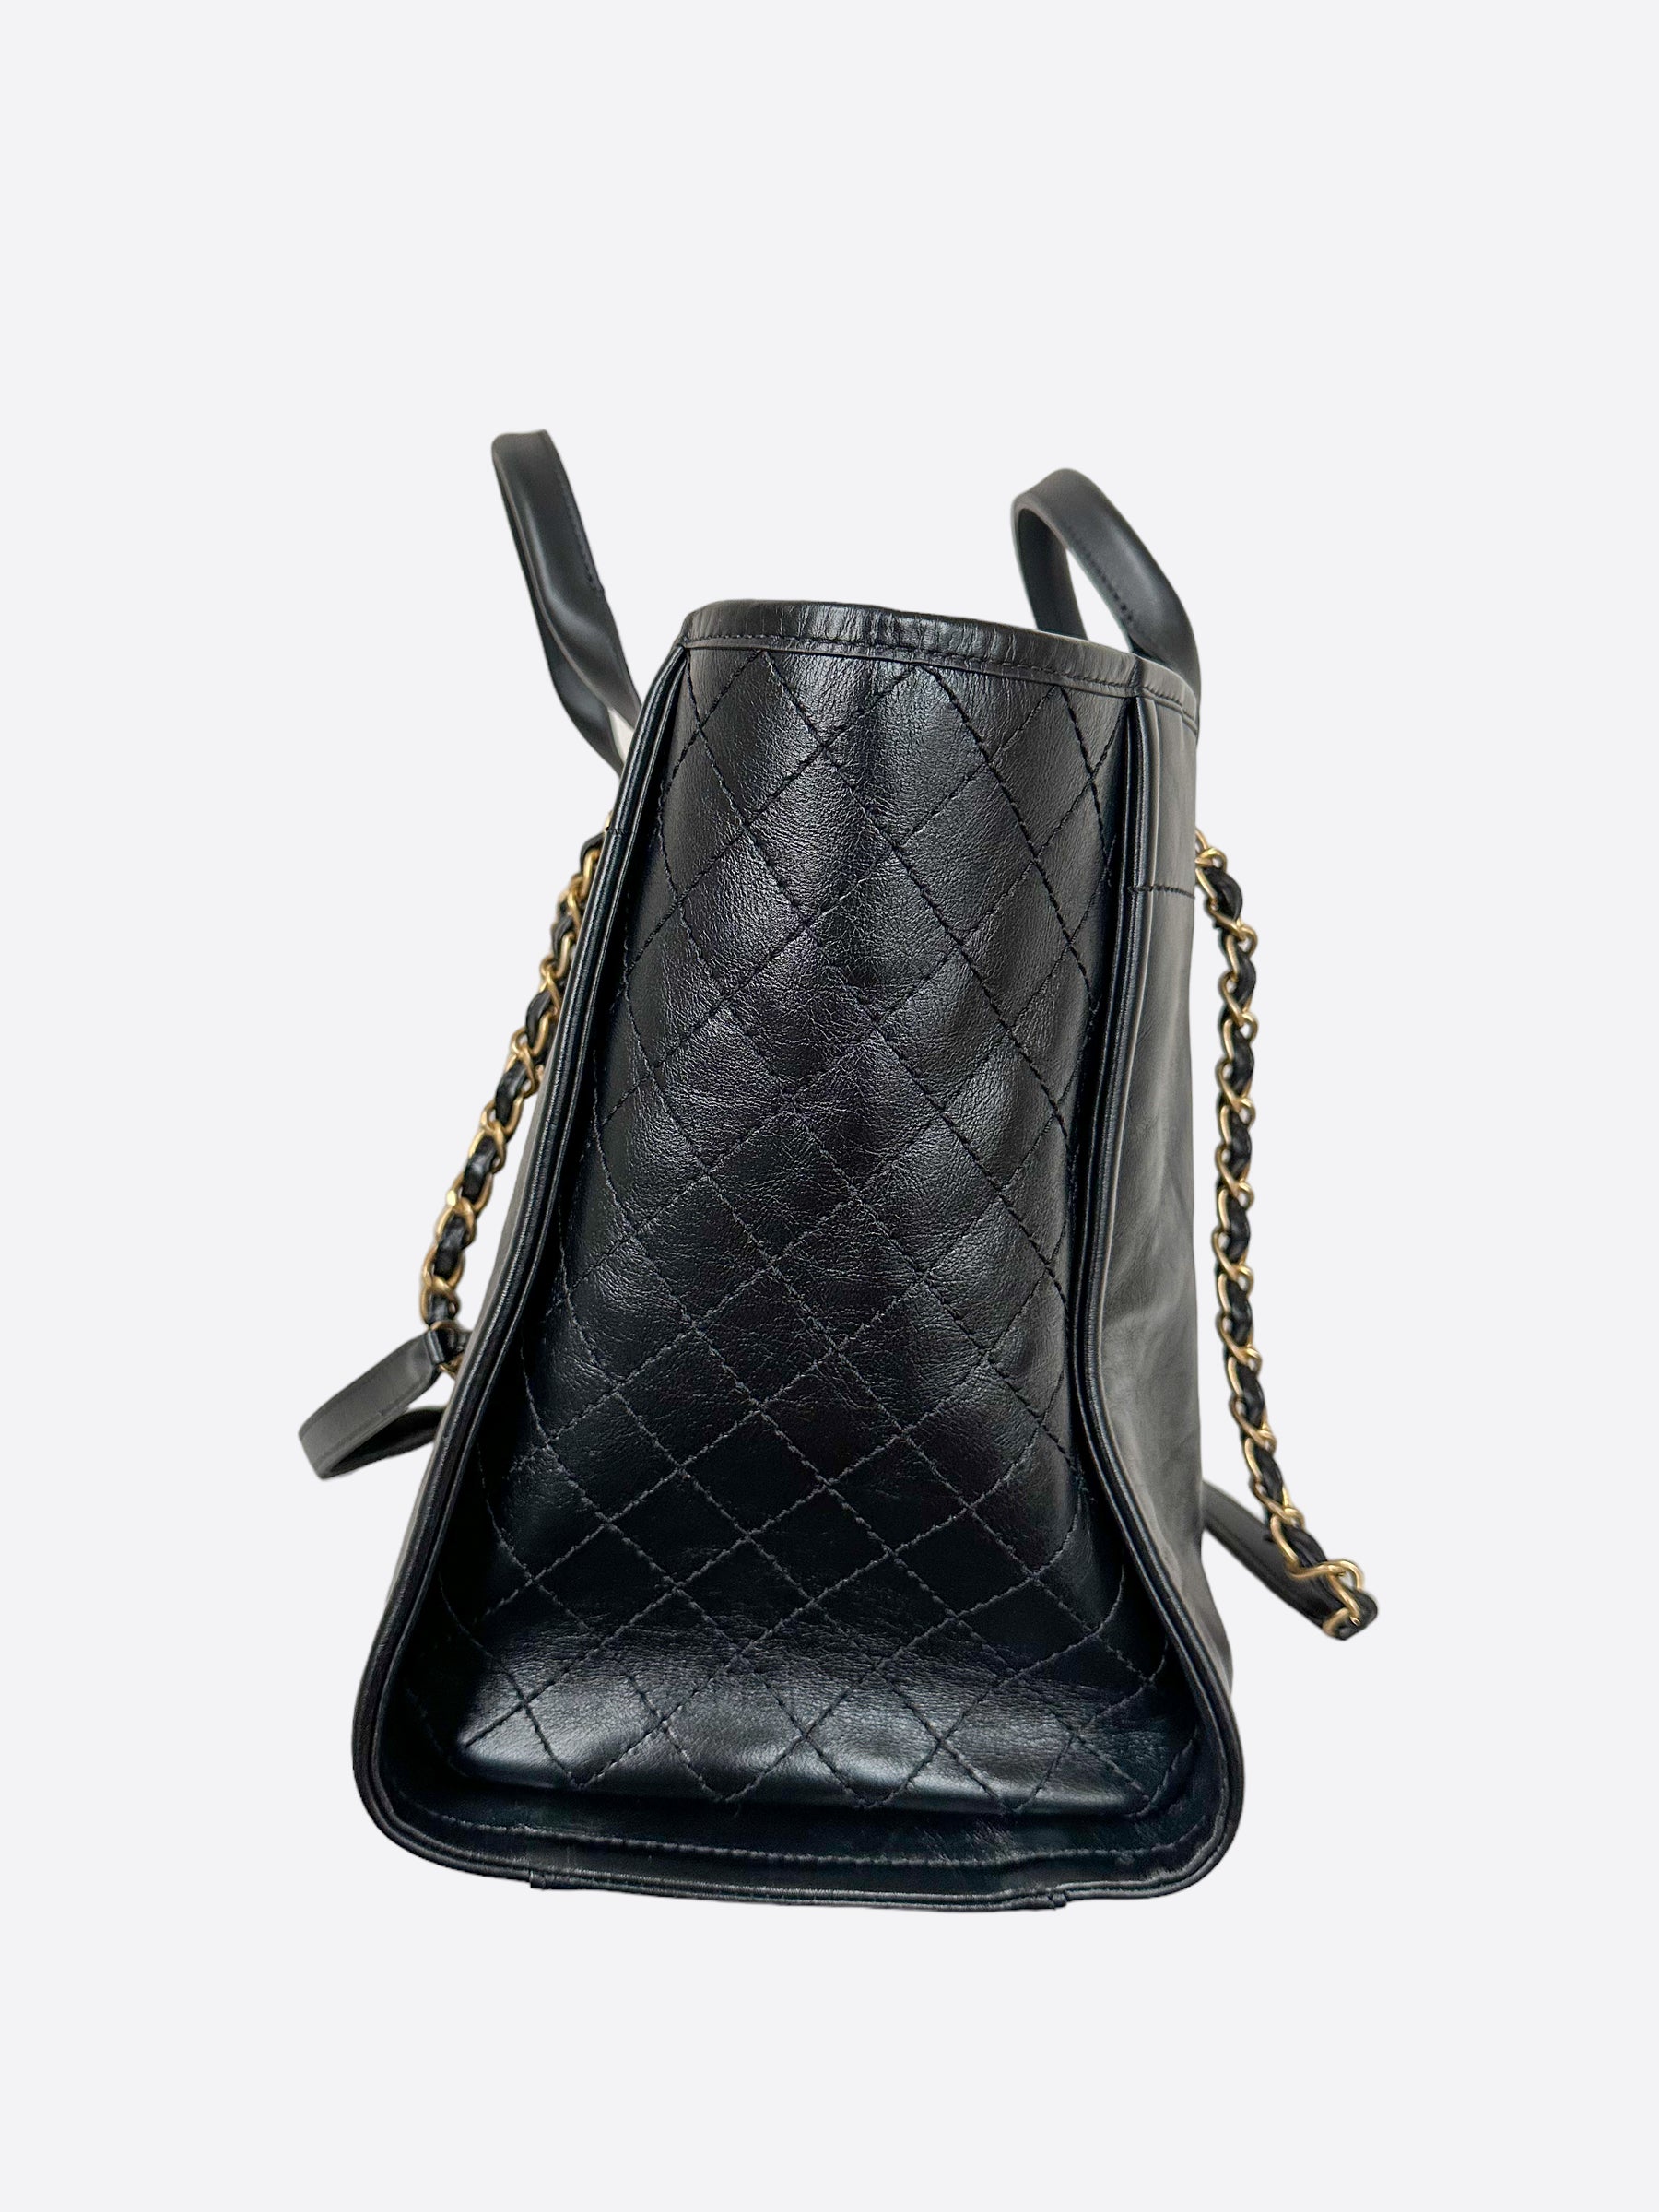 Chanel Women CC Large Shopping Bag Calfskin Aged Gold-Tone Metal